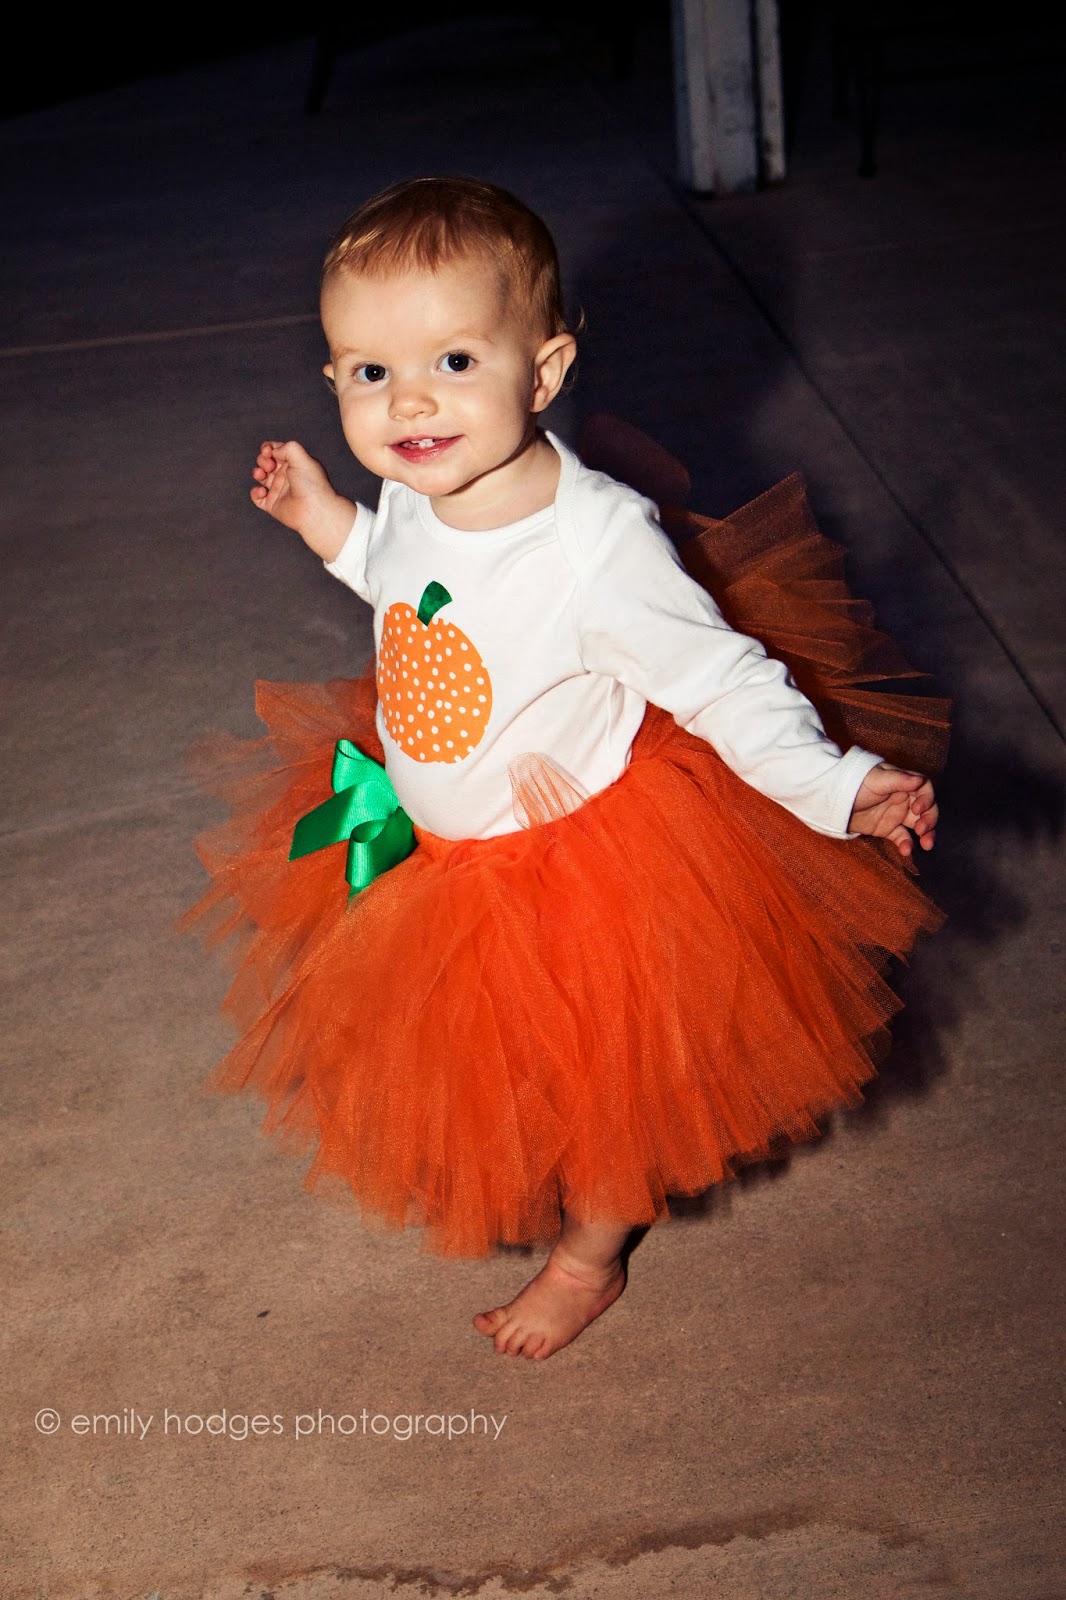 Emily Hodges Photography: Our Little Pumpkin Party